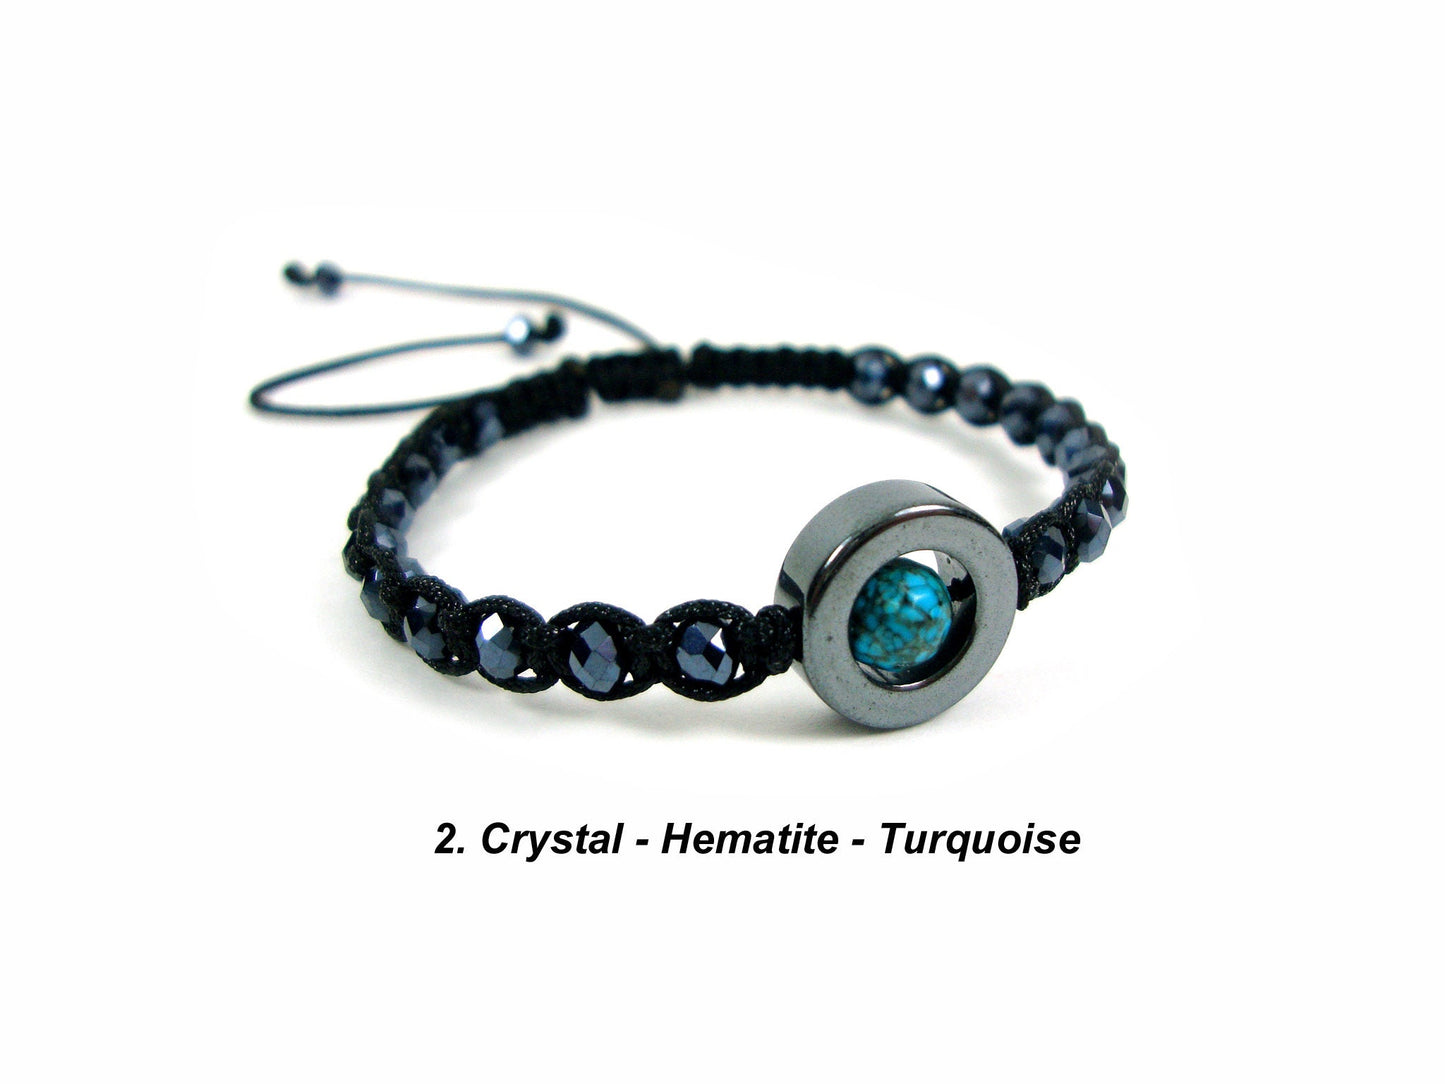 Trendy Modern Macrame Adjustable Bracelets With Swarovski Crystals And Natural Stones